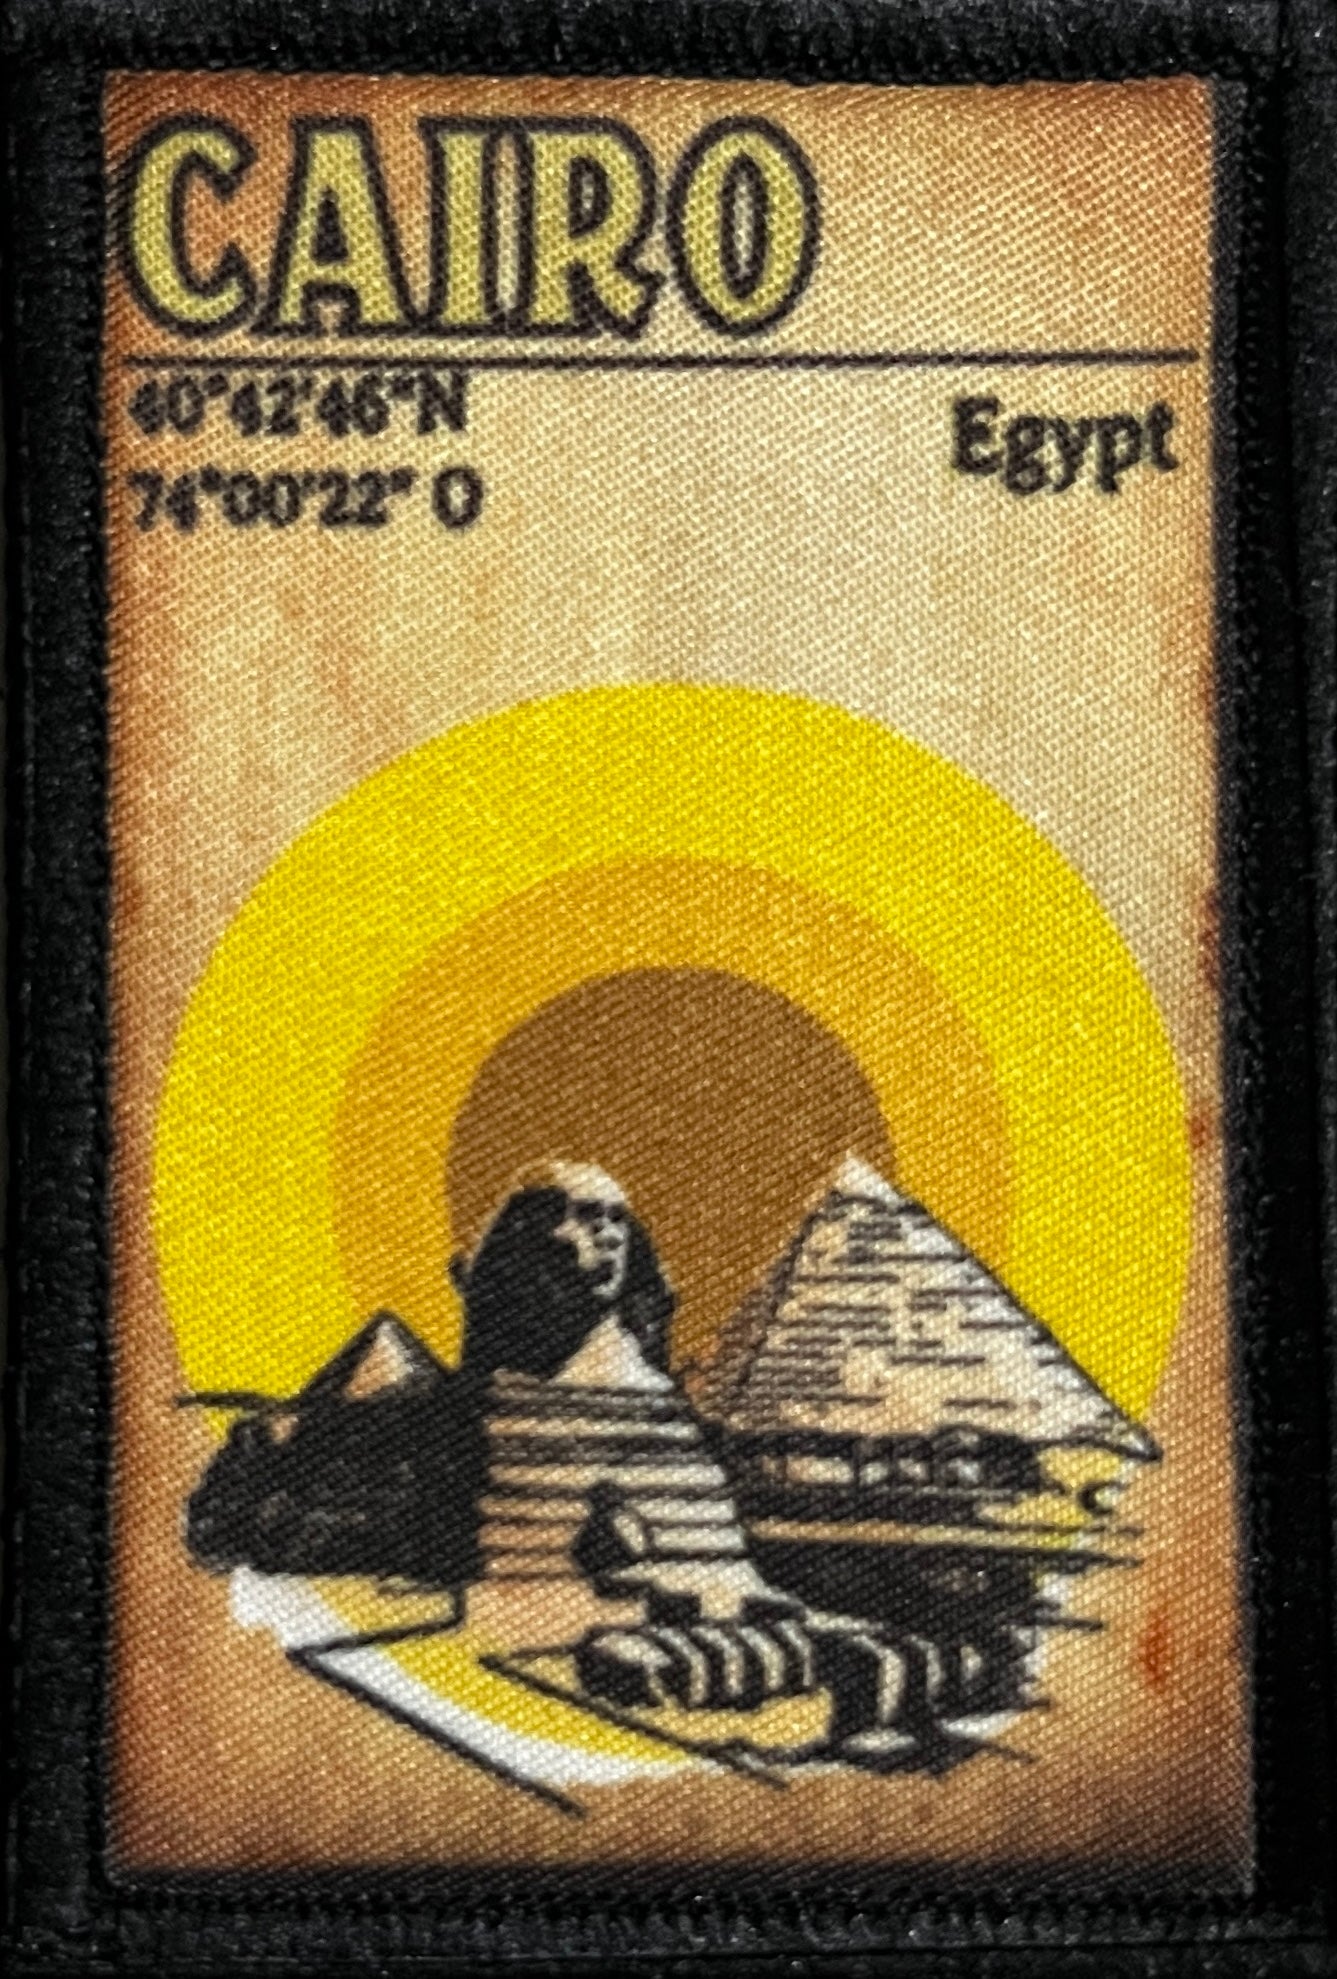 Cairo Egypt Pyramids Morale Patch 2x3